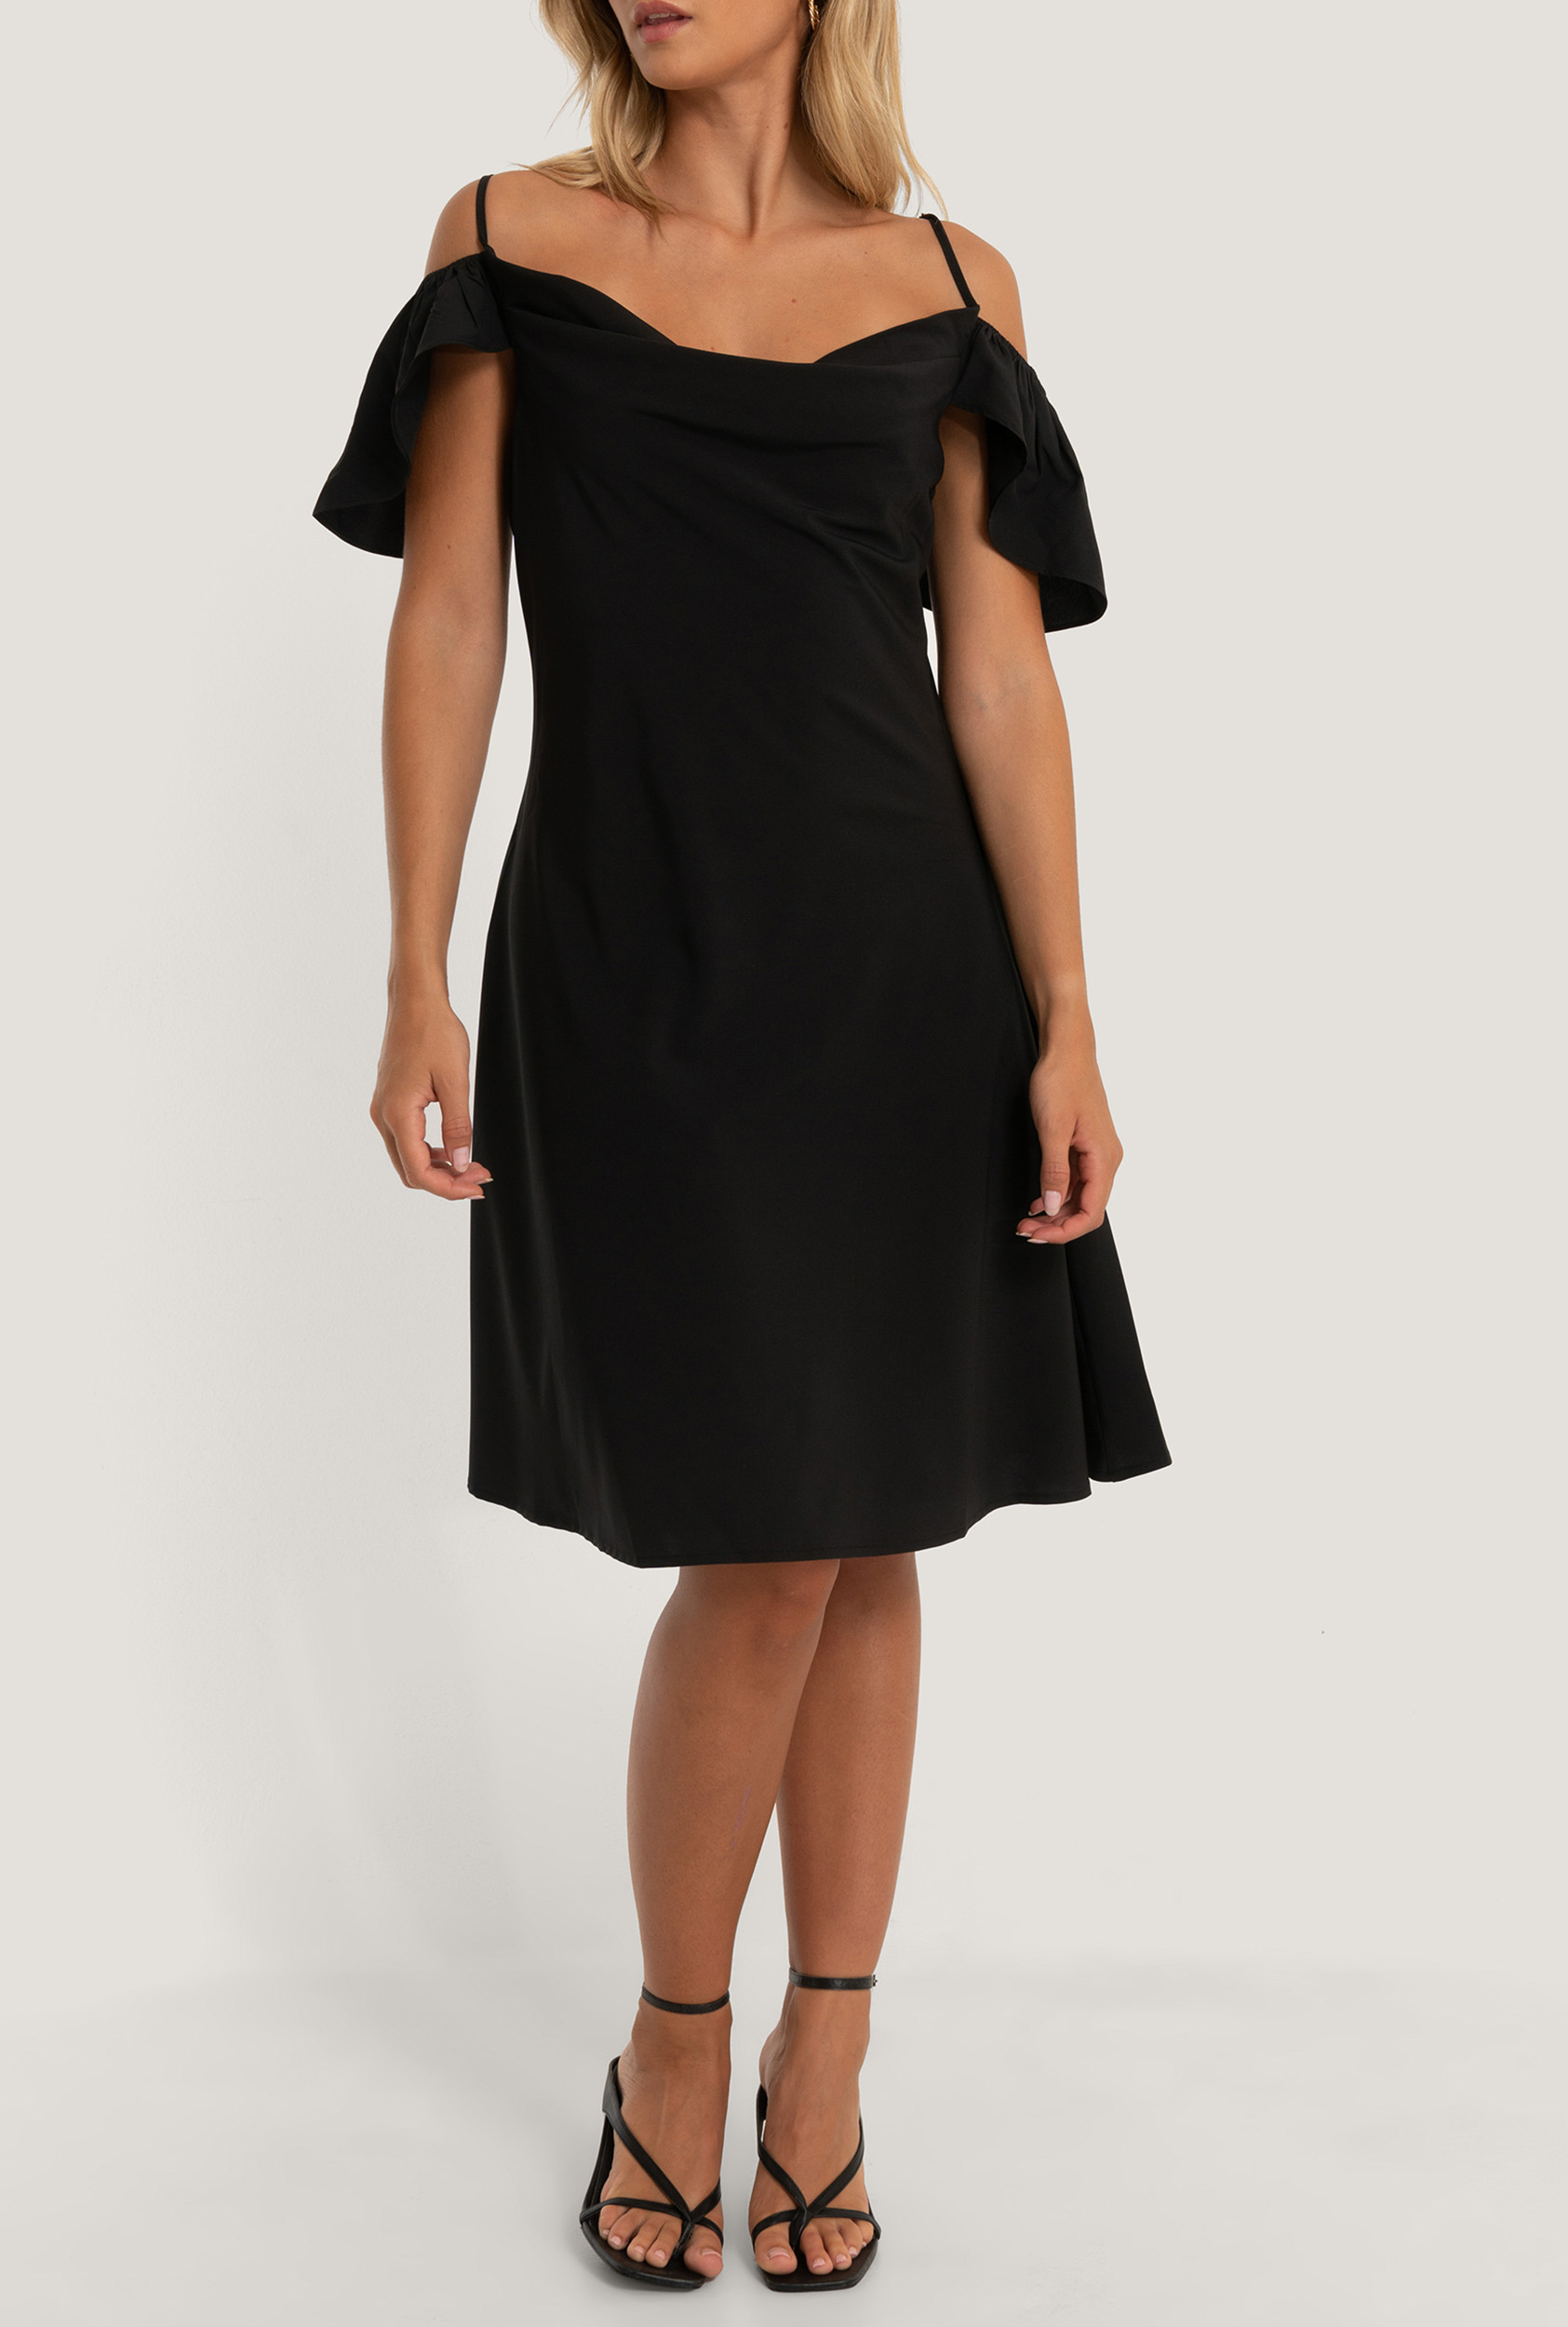 NA-KD – Γυναικειο mini φορεμα NA-KD COWL NECK μαυρο